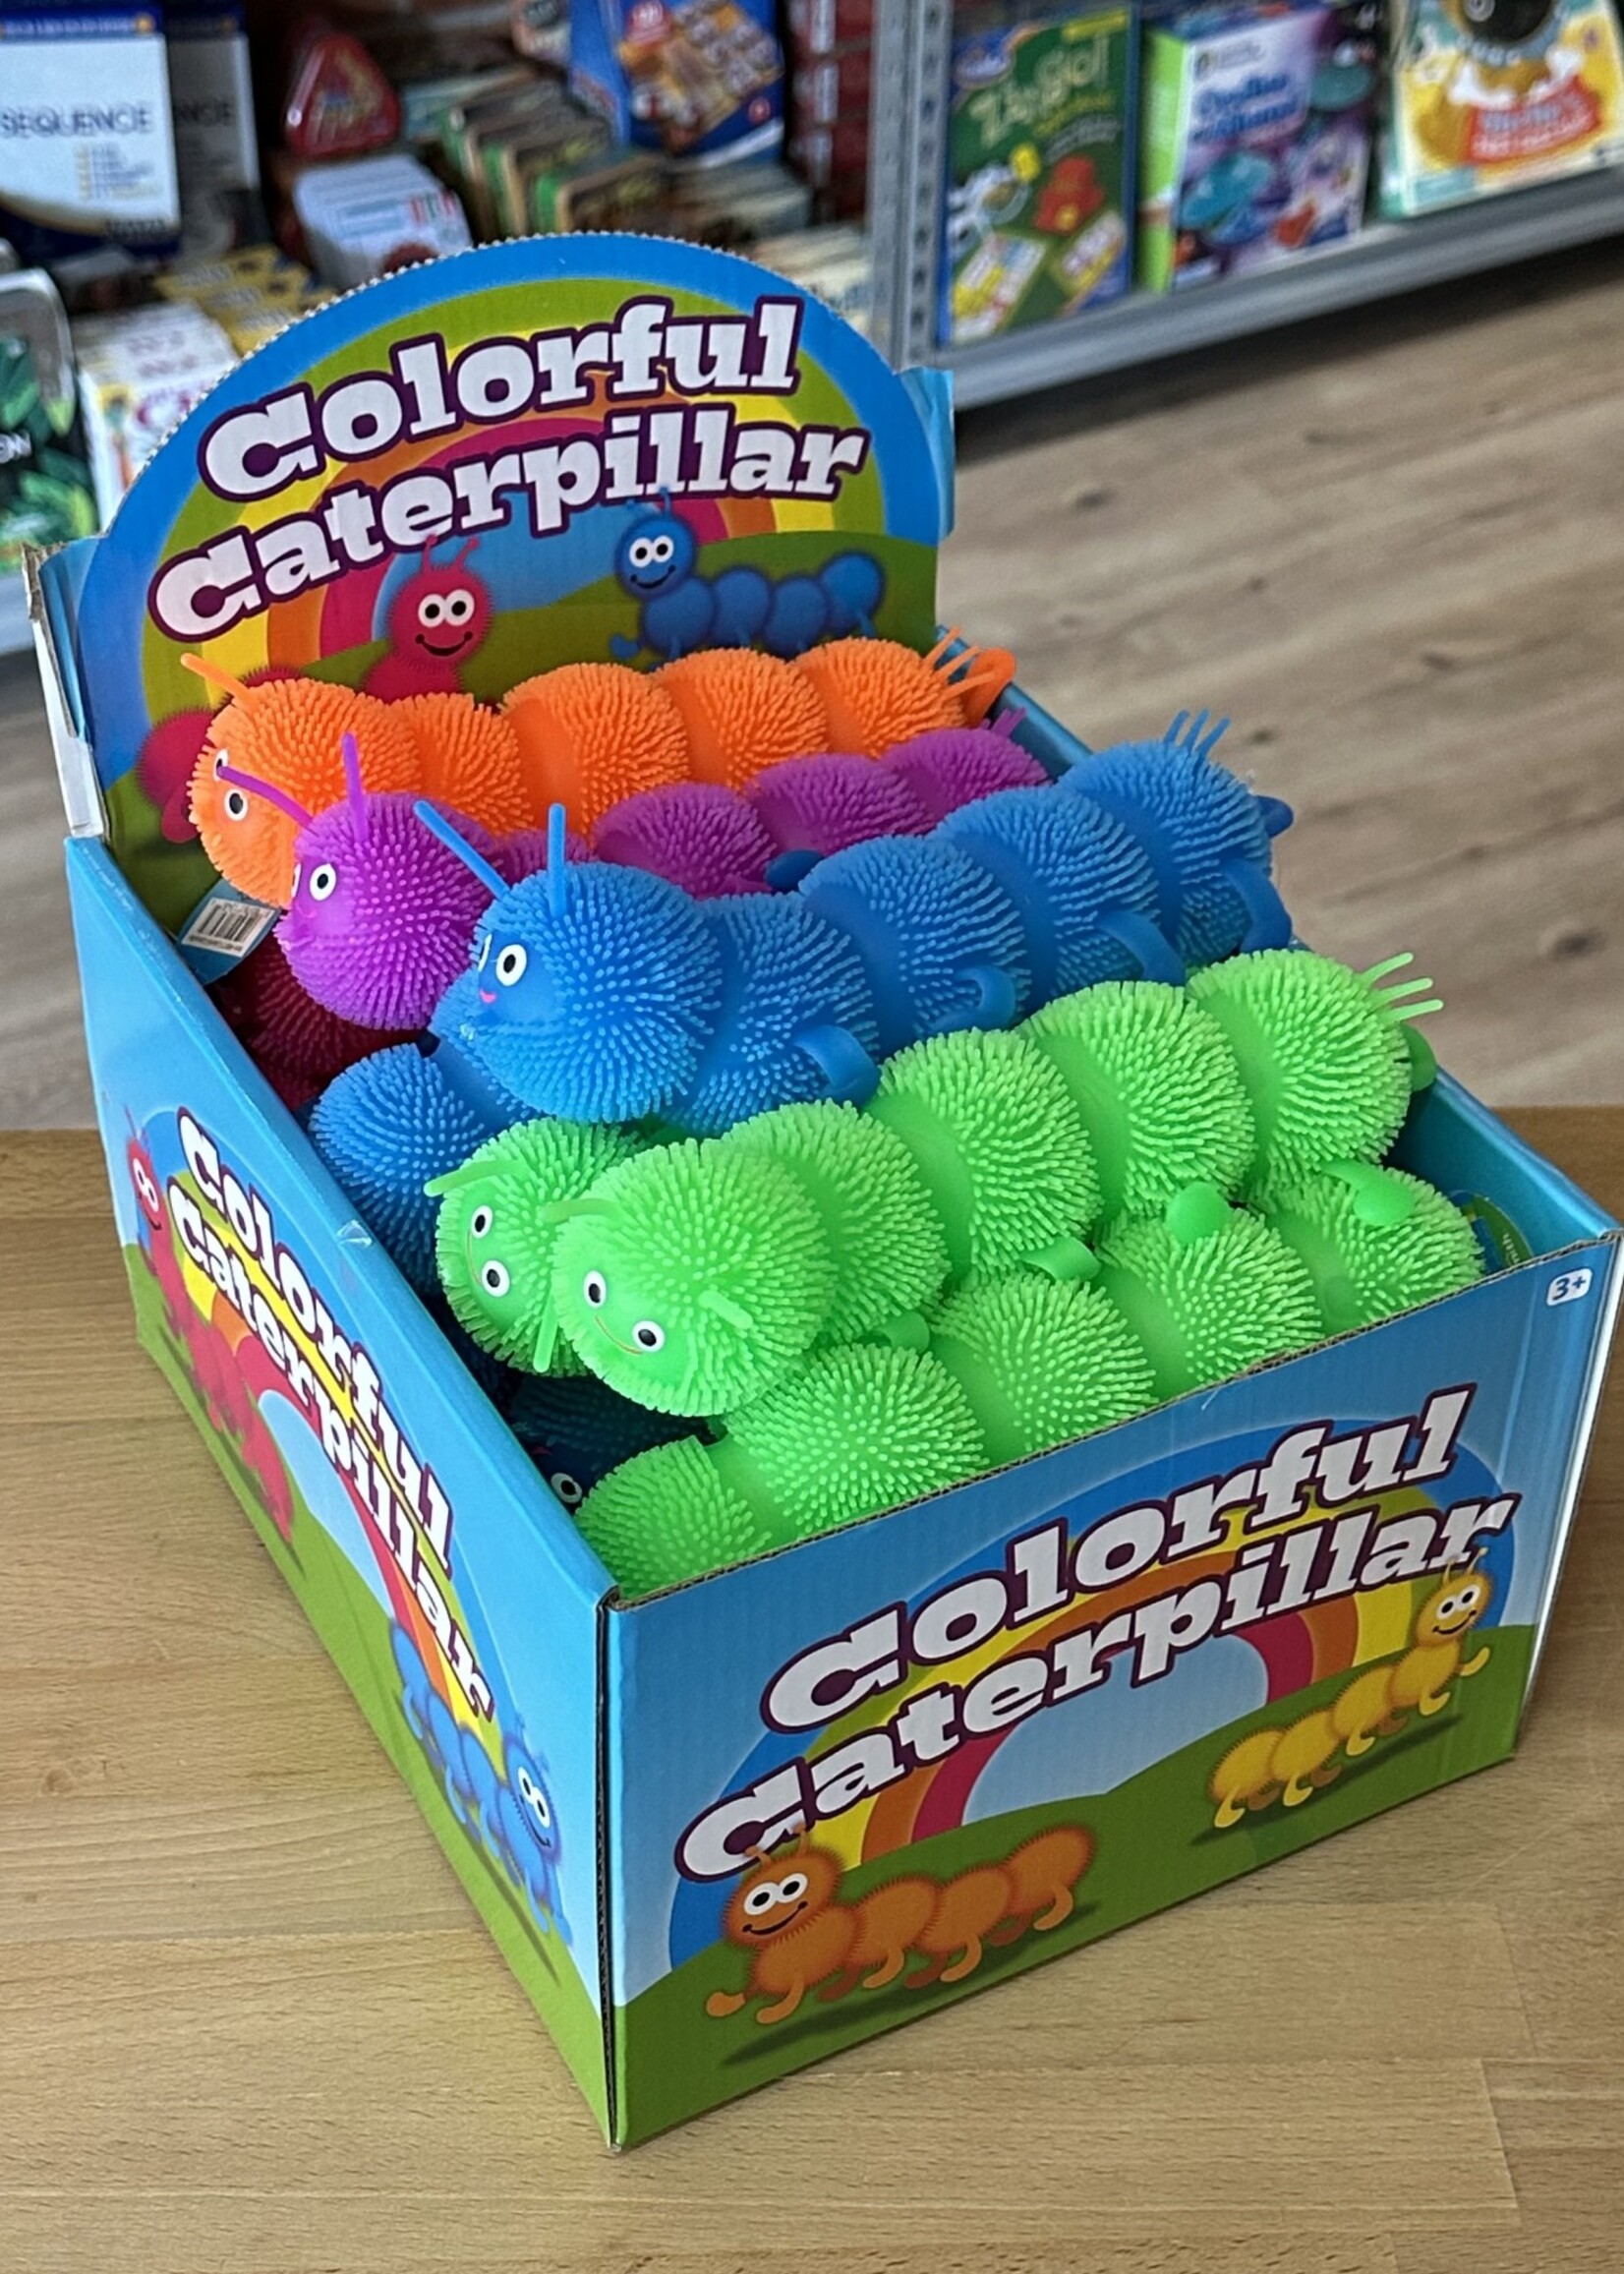 Colorful Caterpillar